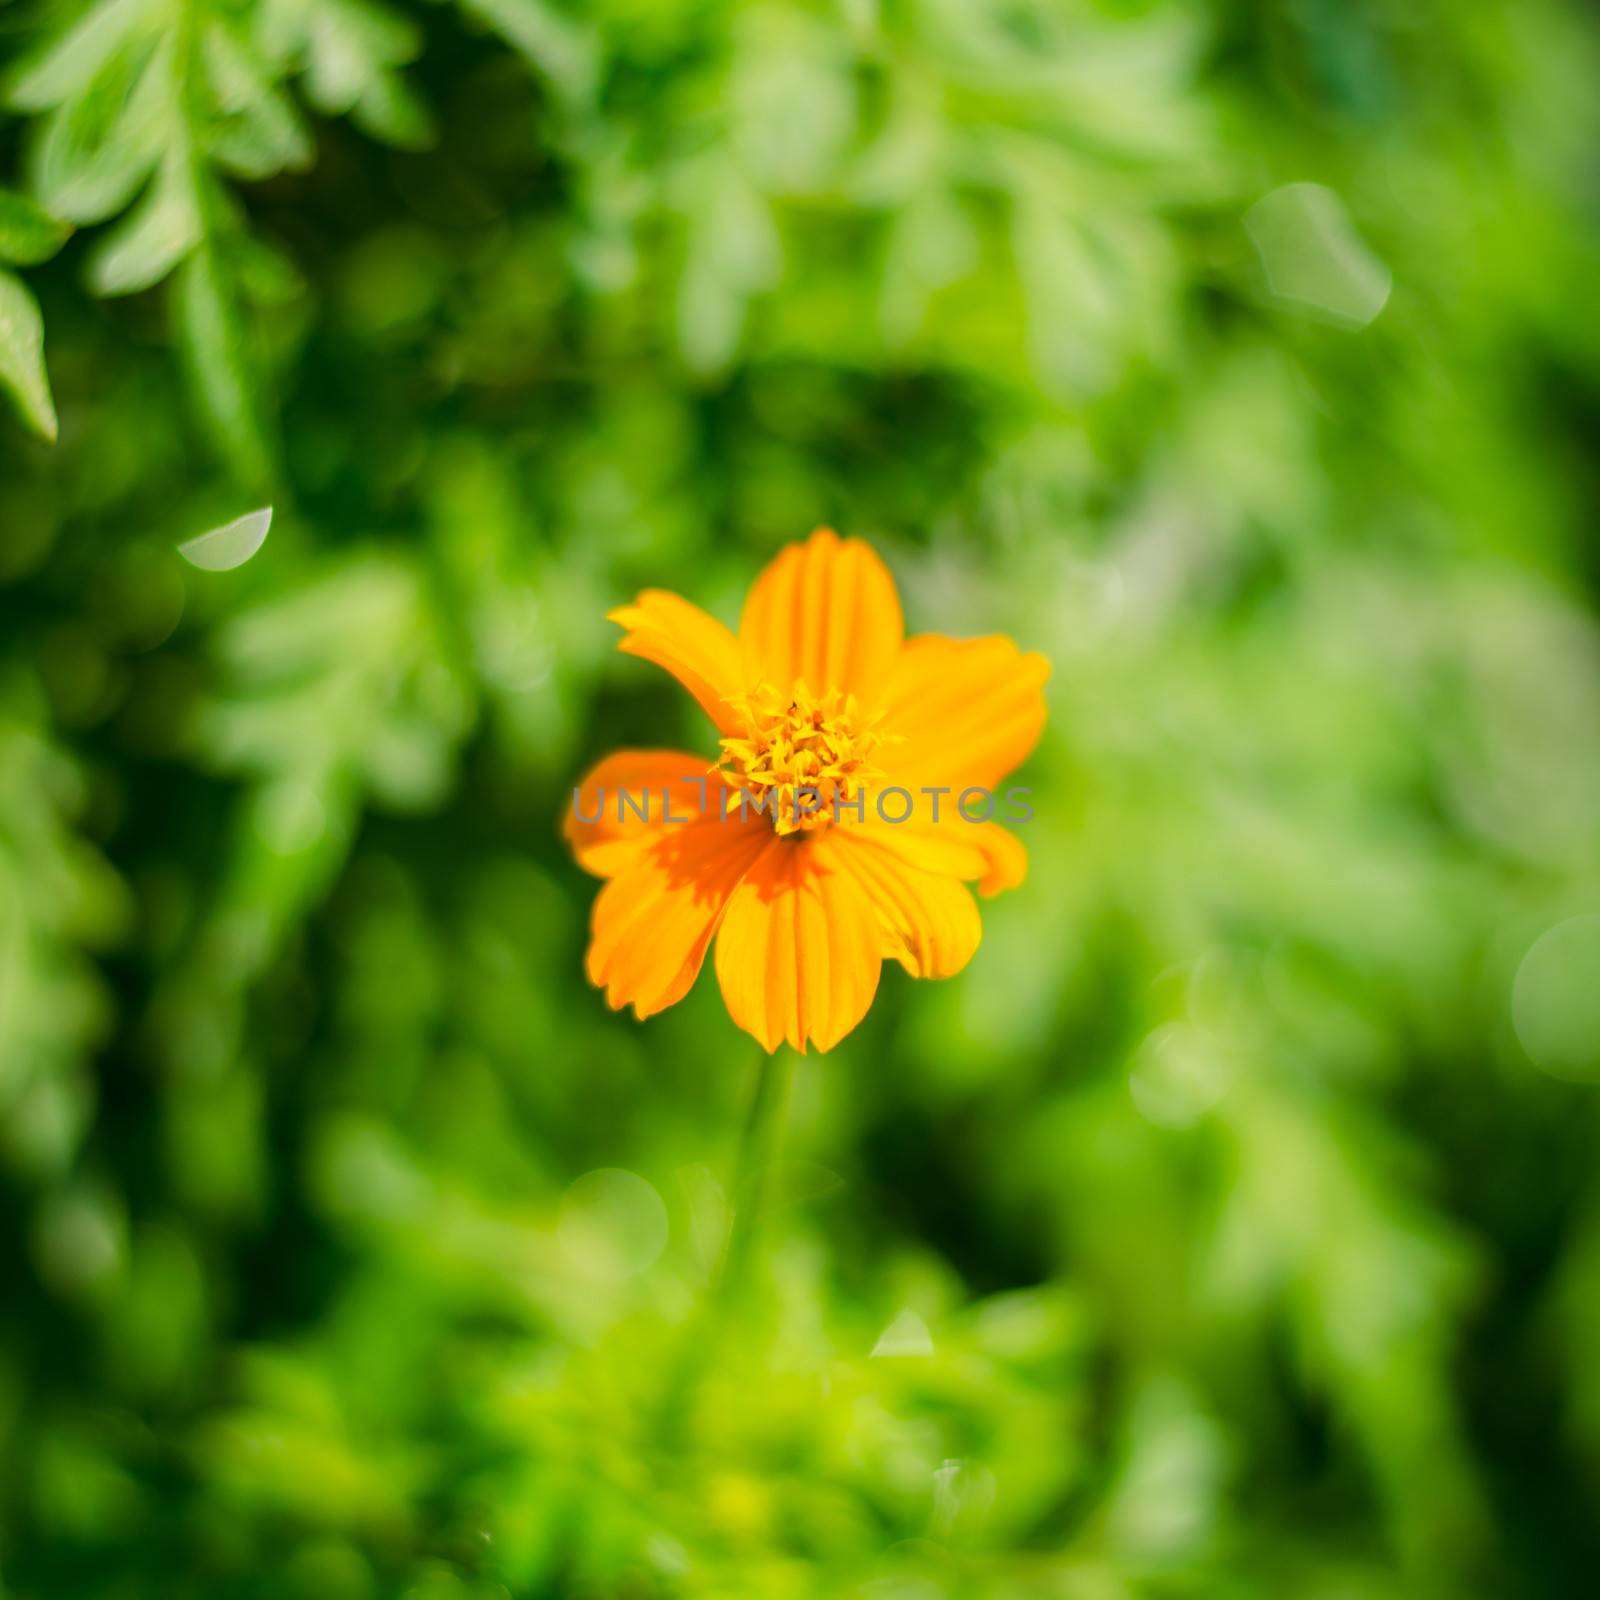  Marigold flower on green leaves background